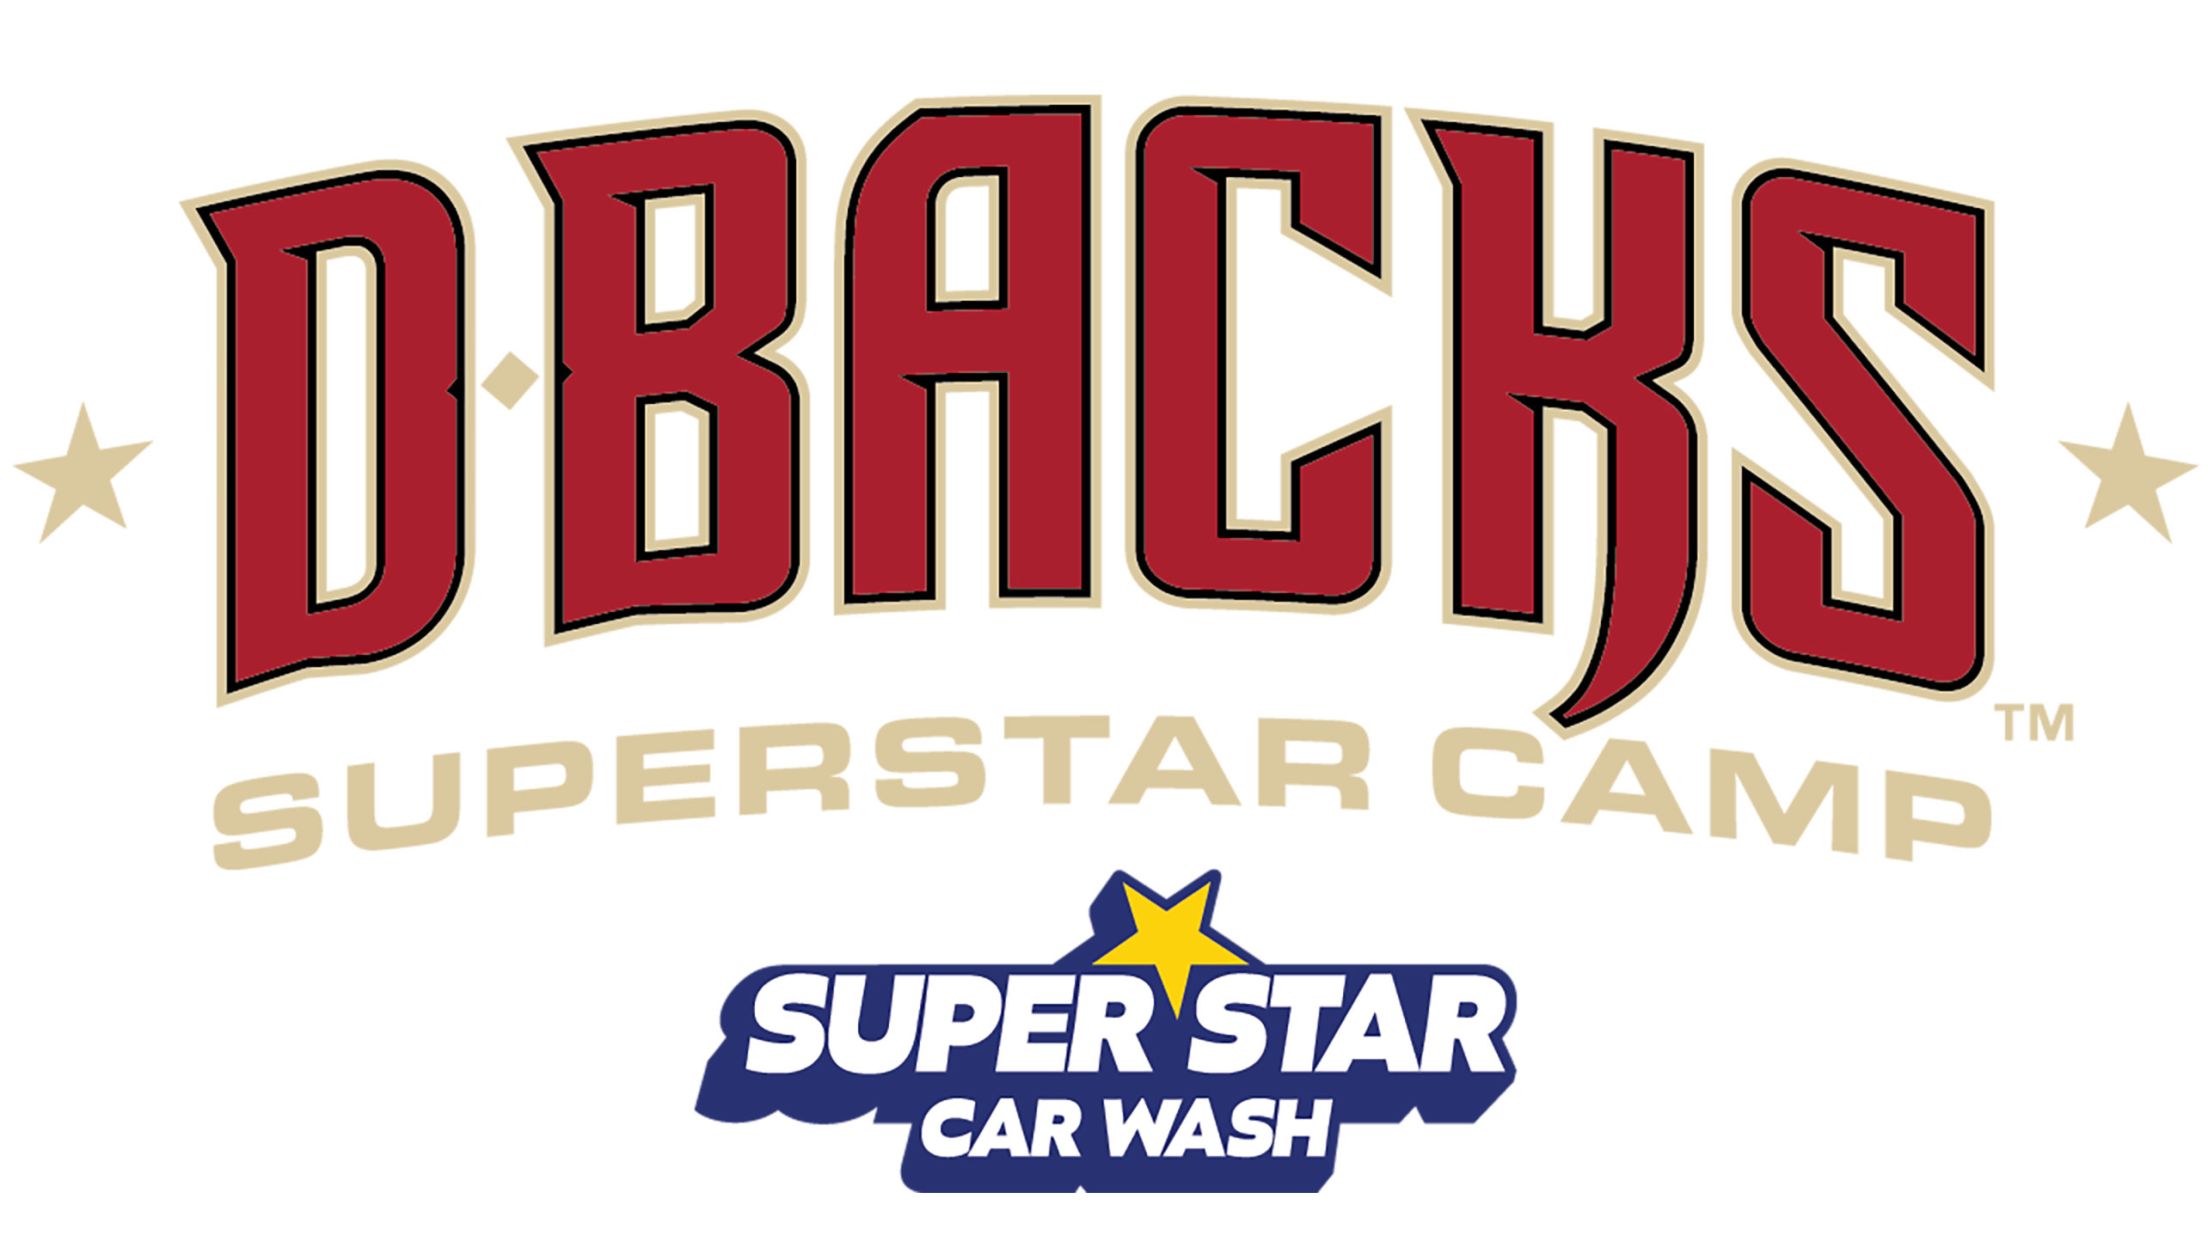 Super Star Car Wash Prices